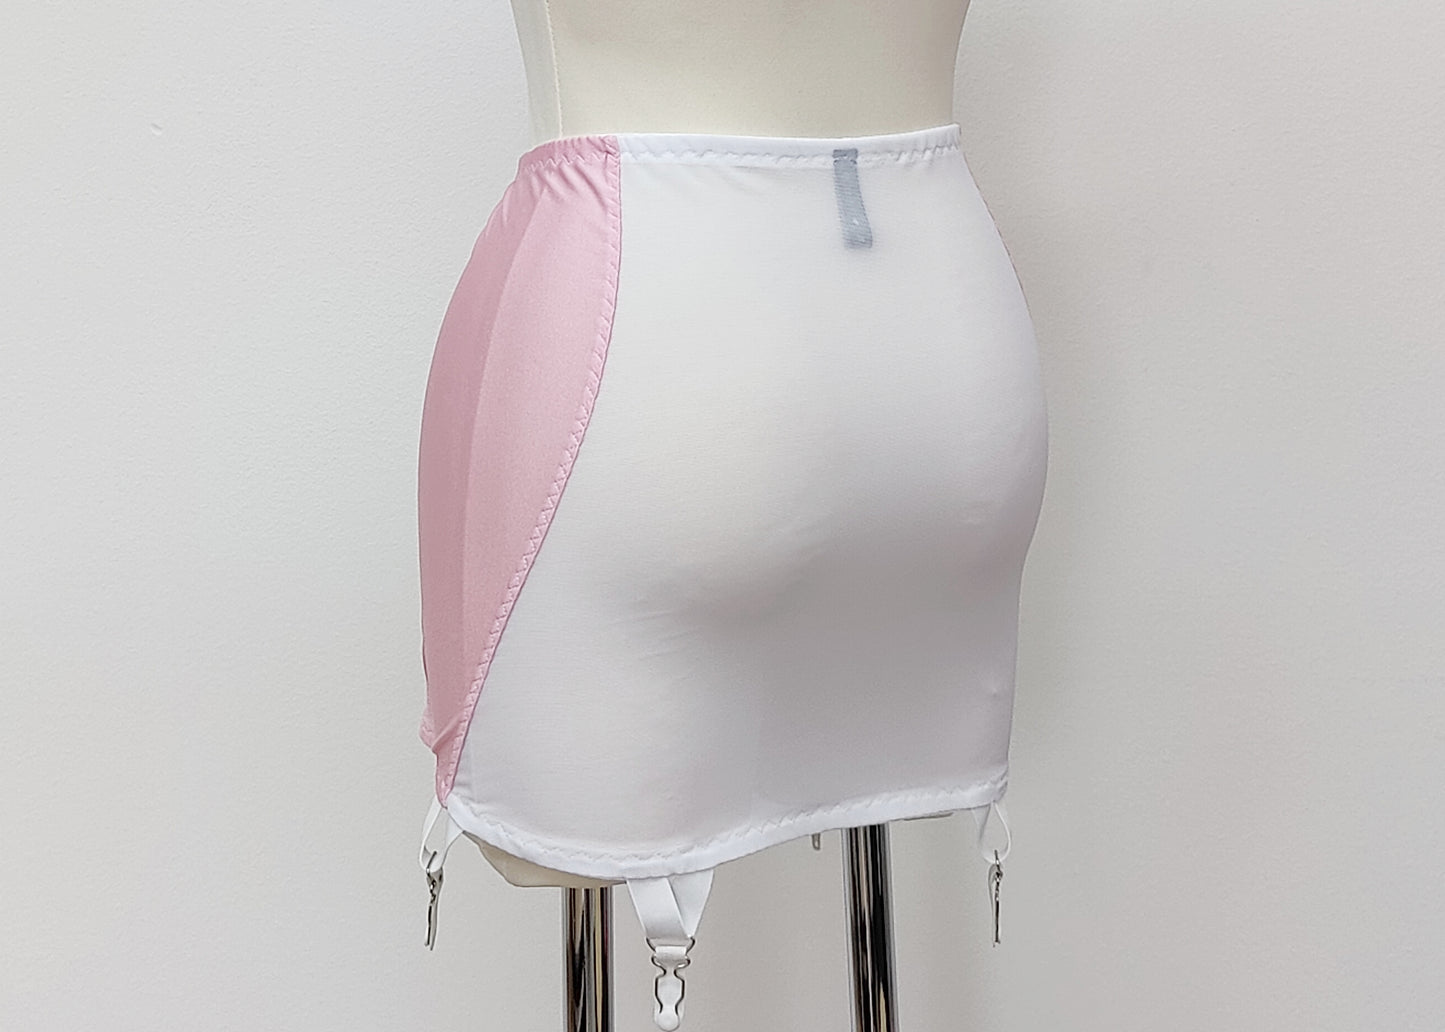 Translucent bottom panty corset vintage shapewear low back boned girdle  sheer lingerie 70's // Victoria's Secret ILGWU // S